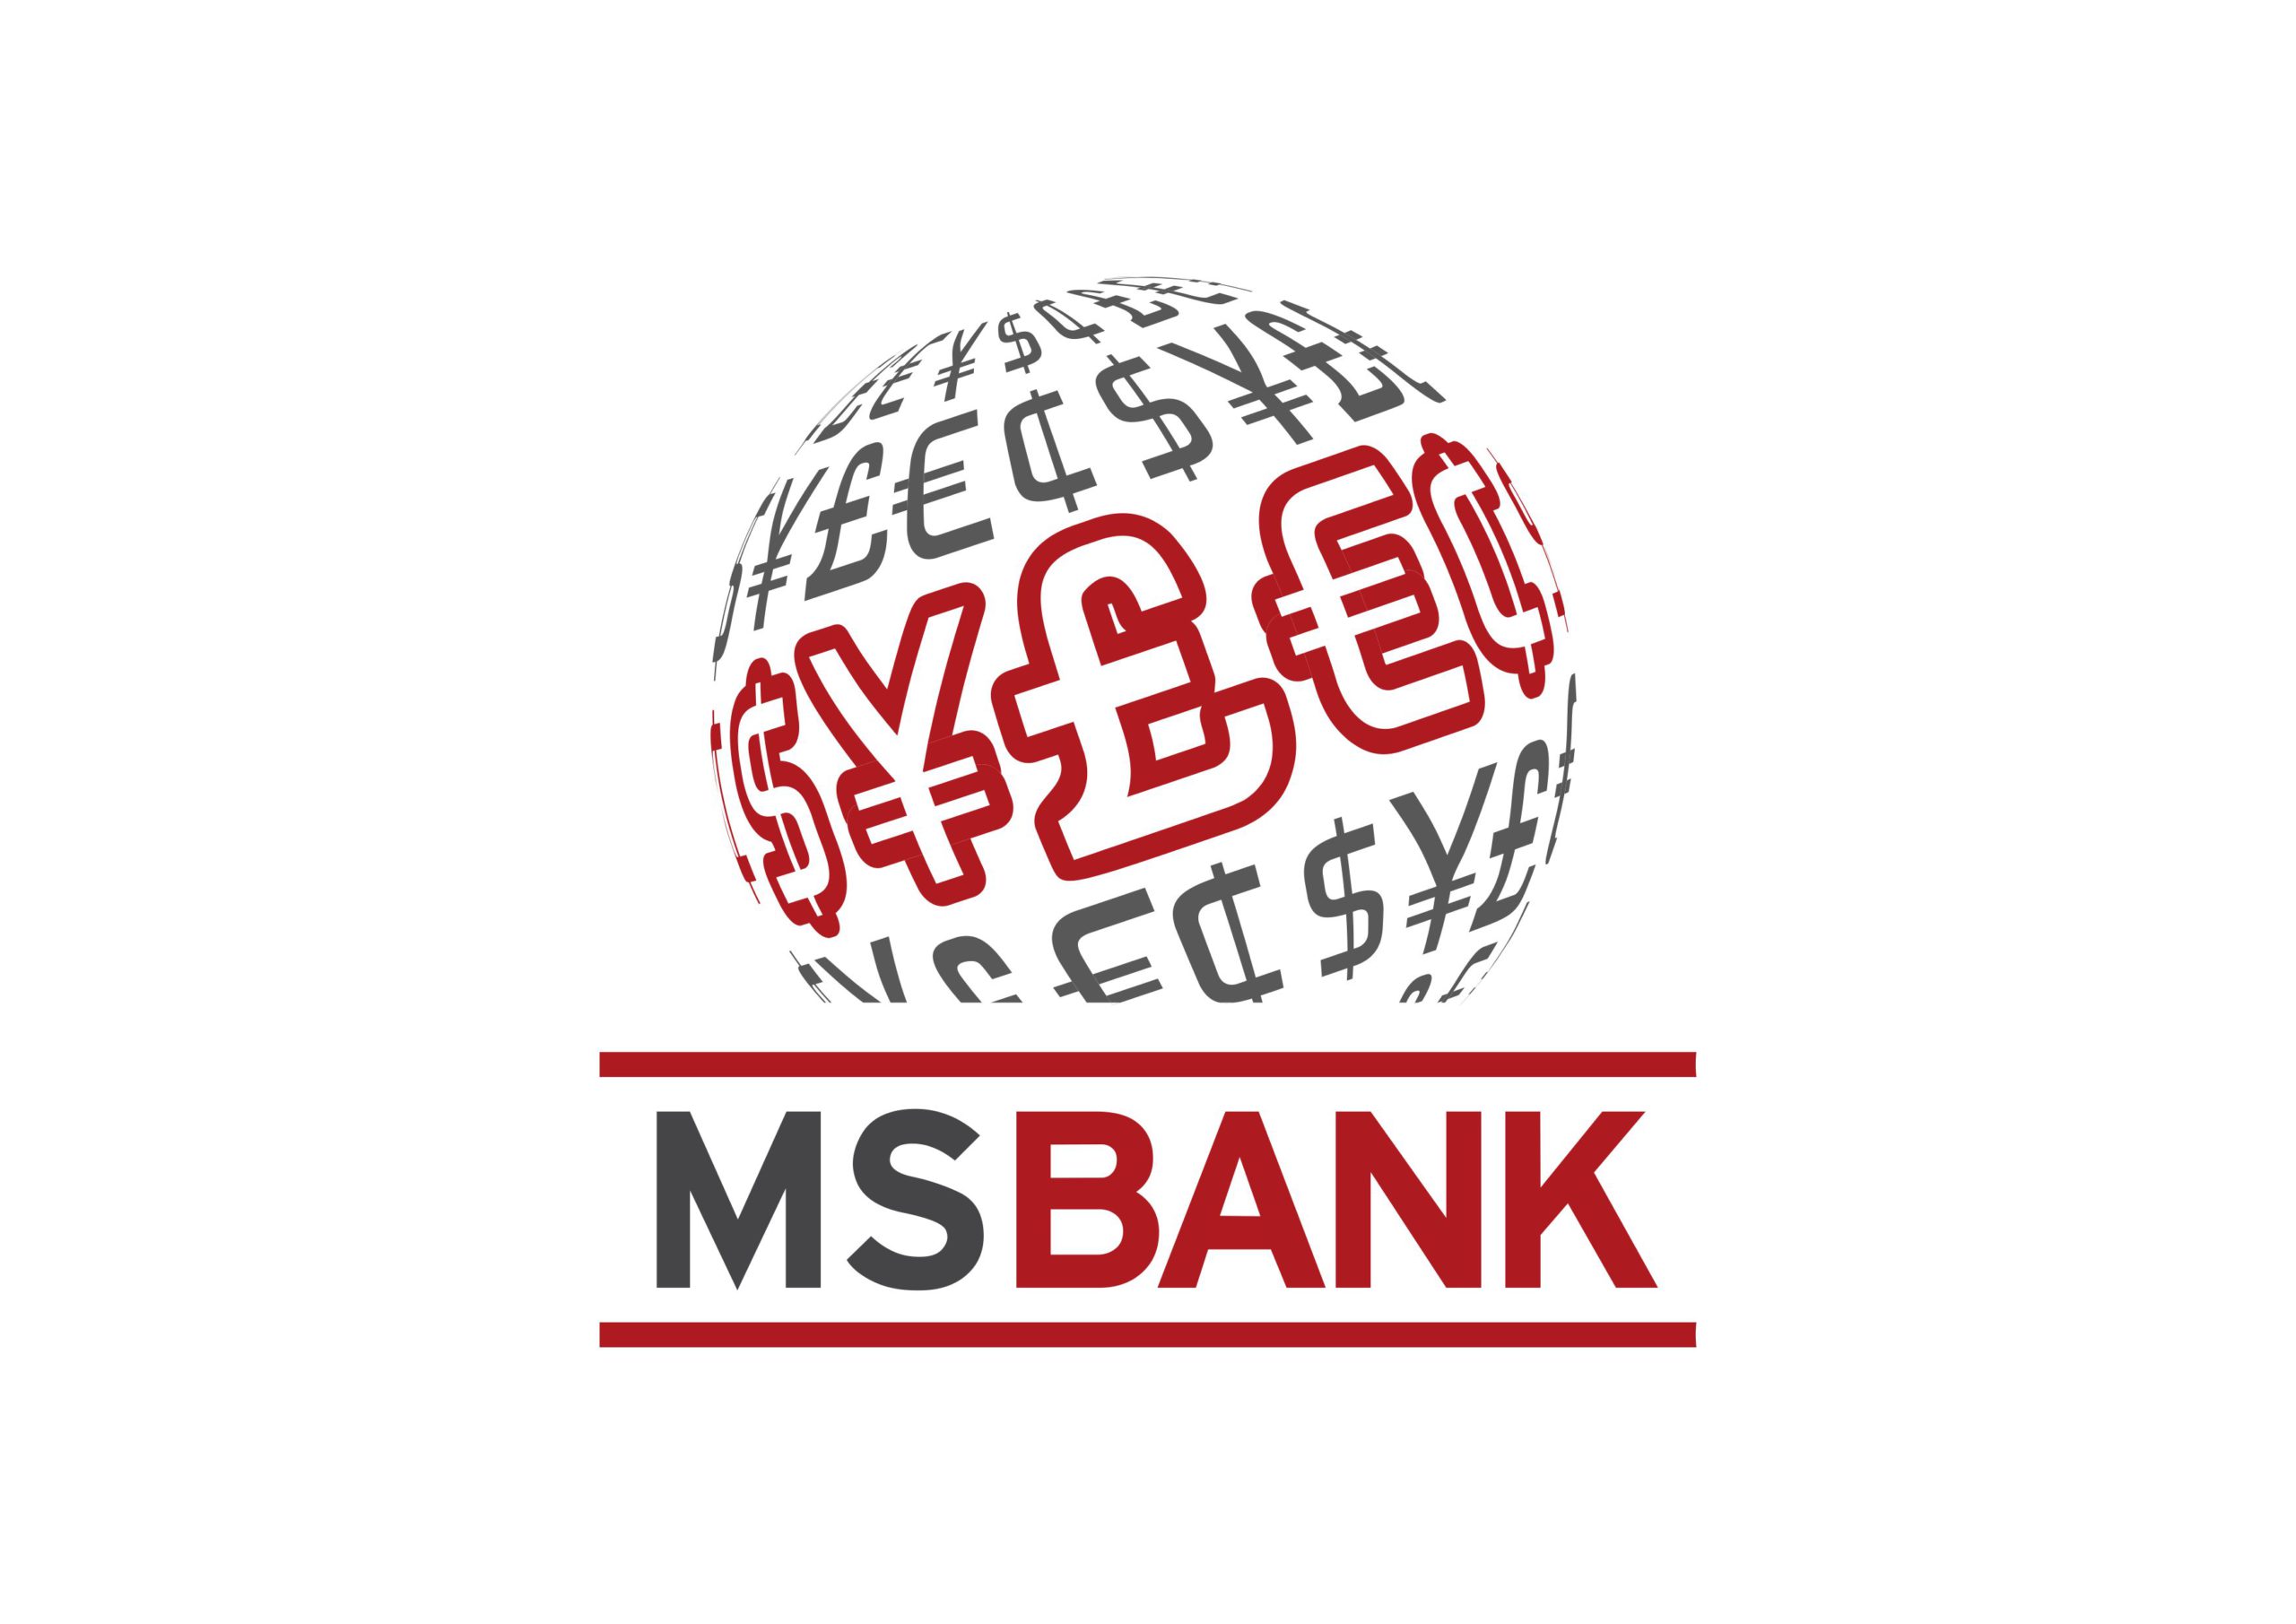 MS BANK